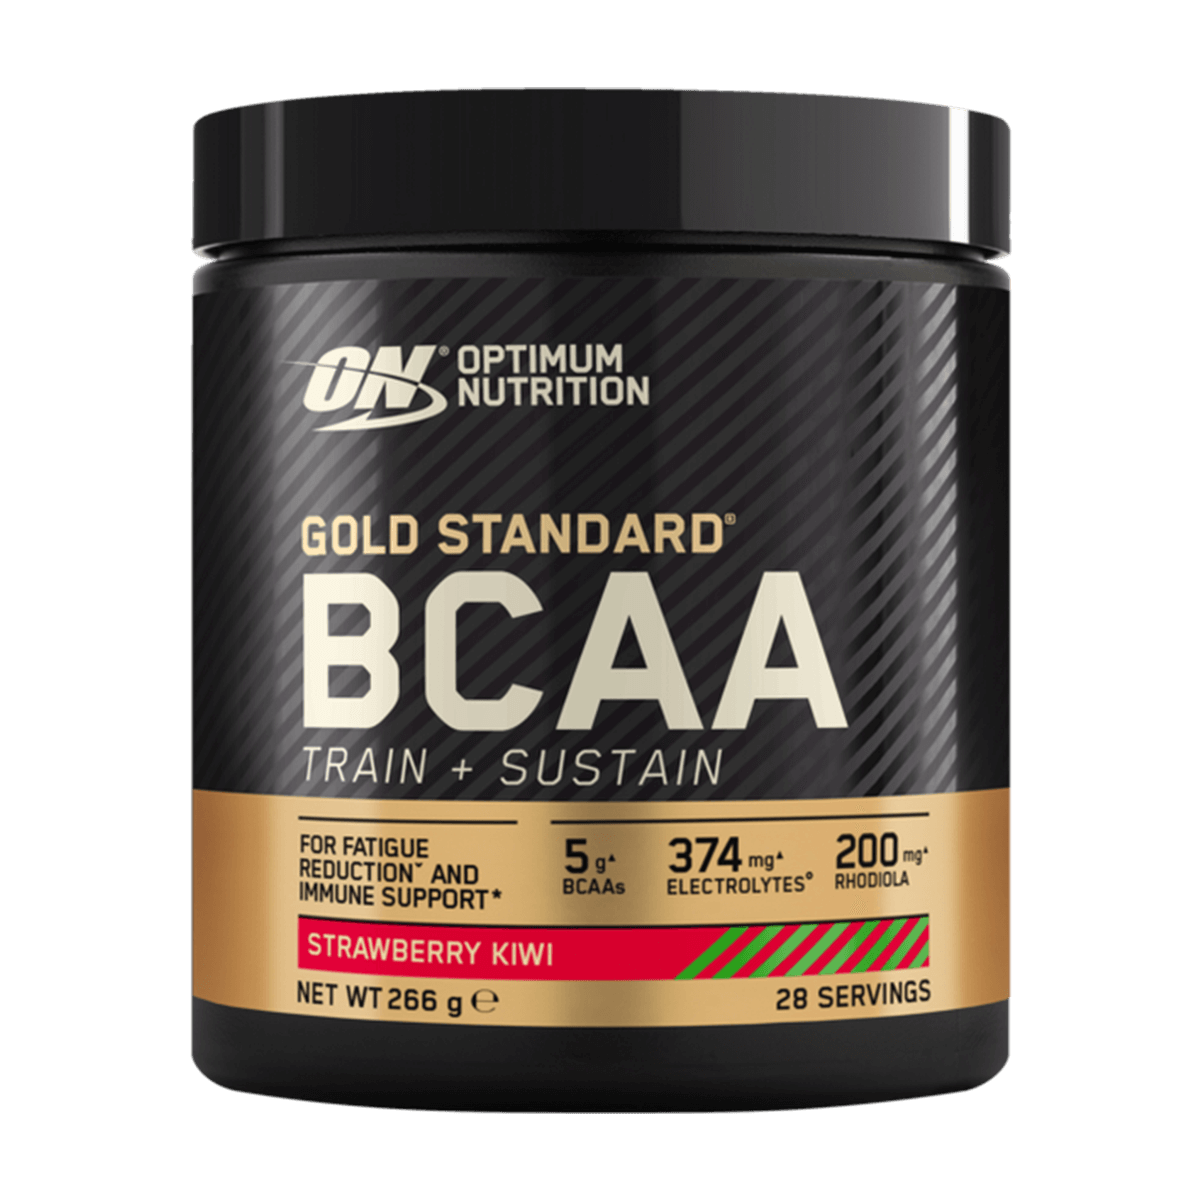 BCAA Train + Sustain Gold Standard - Optimum Nutrition 266g